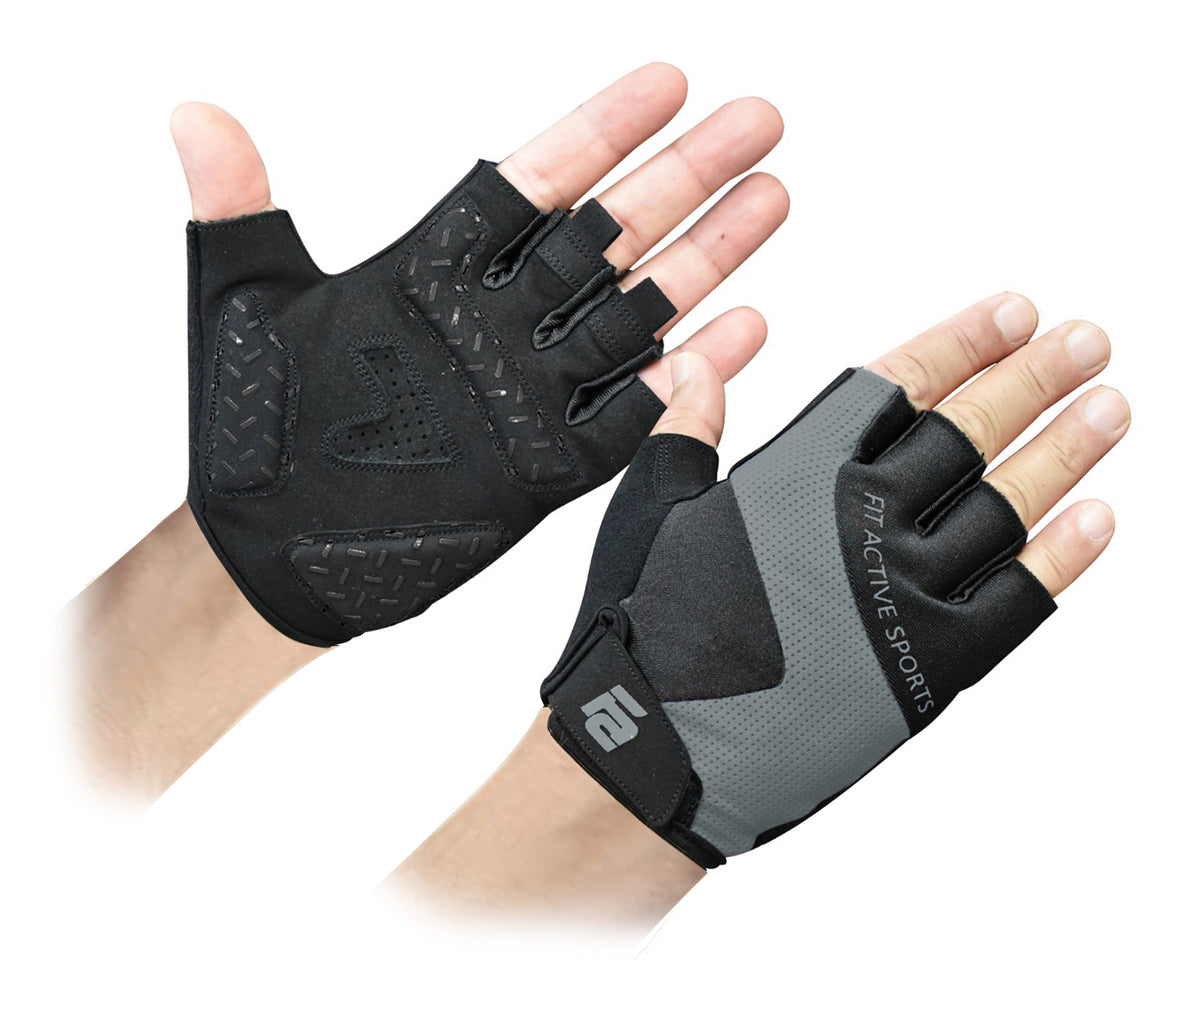 Grip Pad Fitness Training Gloves - MX-923